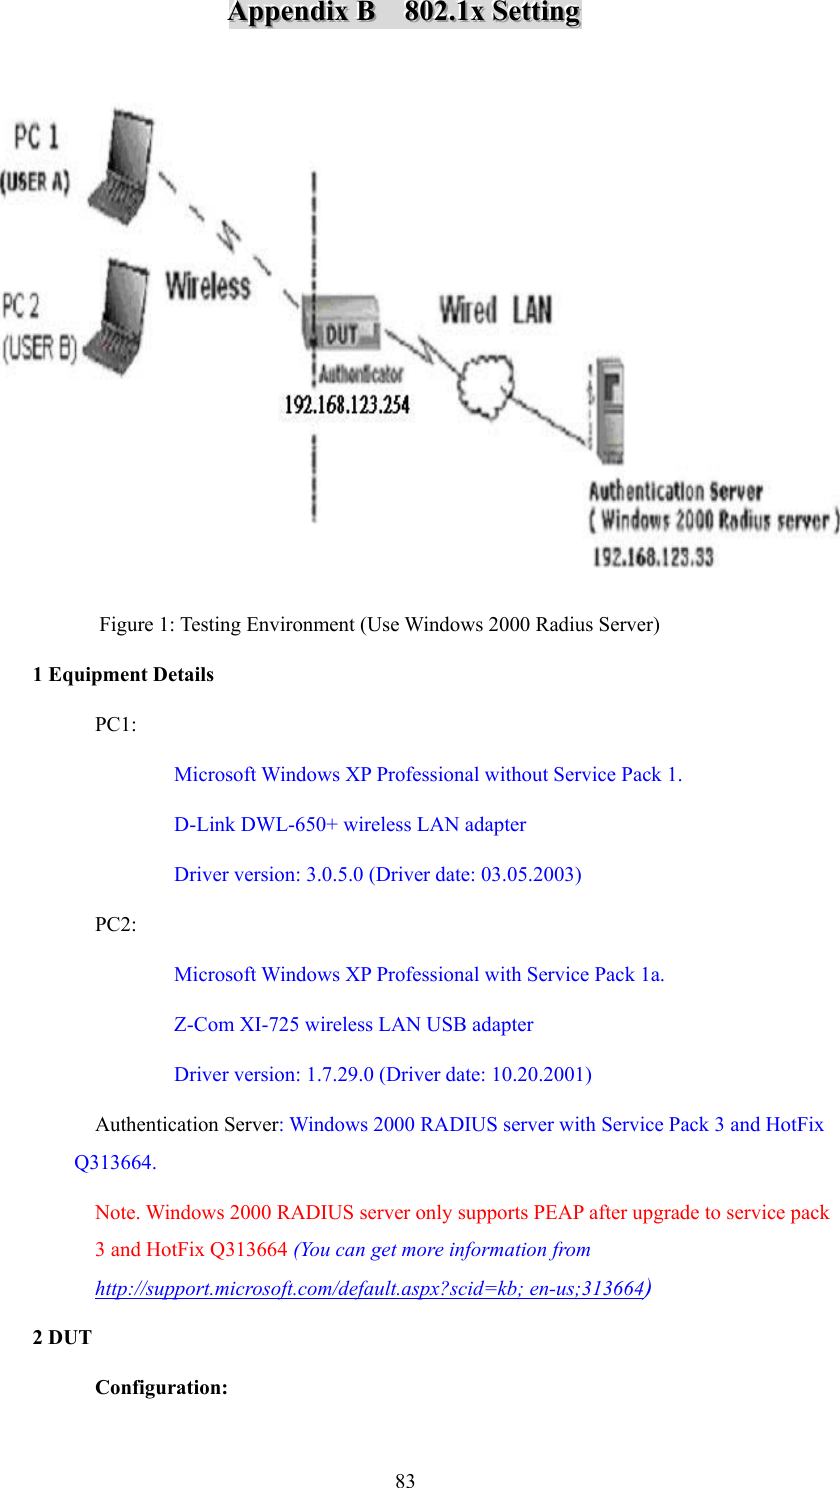  83AAAppppppeeennndddiiixxx   BBB      888000222...111xxx   SSSeeettttttiiinnnggg     Figure 1: Testing Environment (Use Windows 2000 Radius Server) 1 Equipment Details PC1:  Microsoft Windows XP Professional without Service Pack 1. D-Link DWL-650+ wireless LAN adapter Driver version: 3.0.5.0 (Driver date: 03.05.2003) PC2:  Microsoft Windows XP Professional with Service Pack 1a. Z-Com XI-725 wireless LAN USB adapter Driver version: 1.7.29.0 (Driver date: 10.20.2001) Authentication Server: Windows 2000 RADIUS server with Service Pack 3 and HotFix Q313664.     Note. Windows 2000 RADIUS server only supports PEAP after upgrade to service pack 3 and HotFix Q313664 (You can get more information from   http://support.microsoft.com/default.aspx?scid=kb; en-us;313664) 2 DUT   Configuration: 